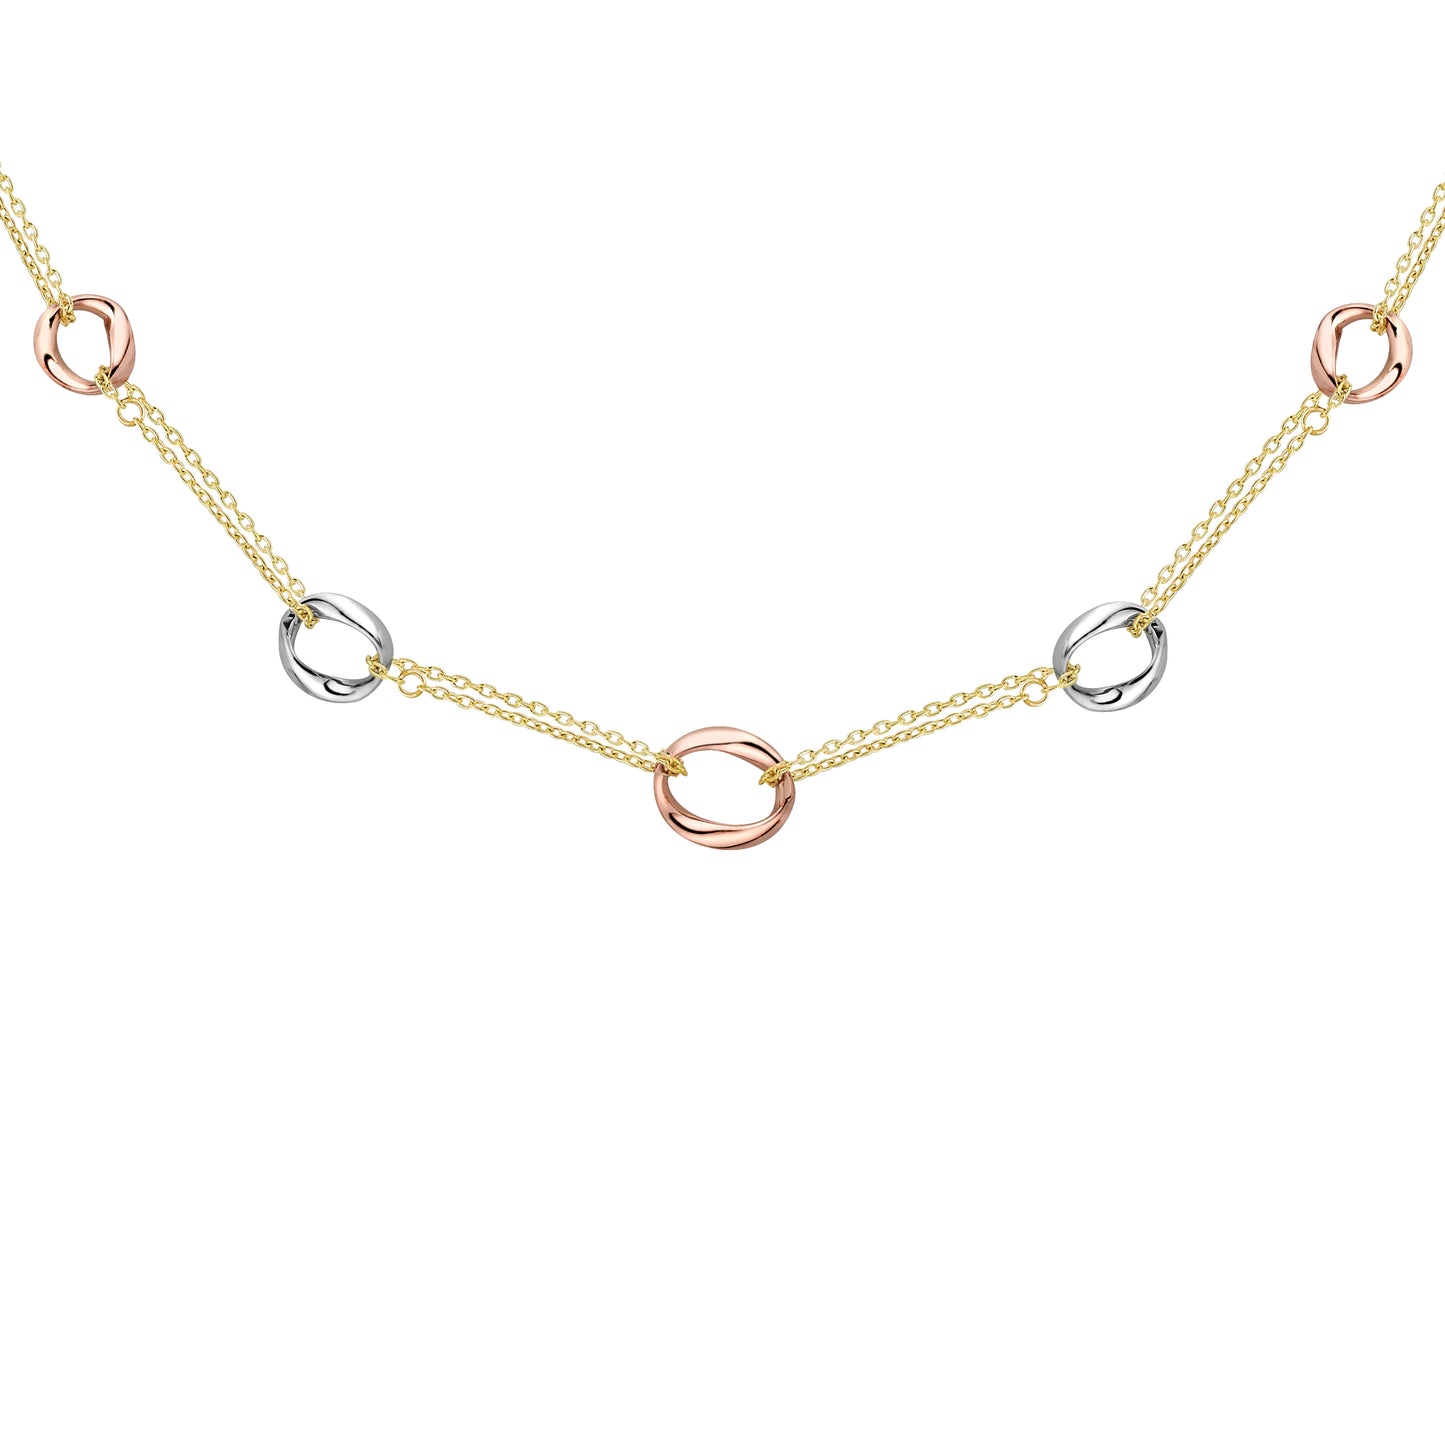 9ct 3 Colour Gold  Donut Link Double Trace Chain Necklace 17" 43cm - CNNR02155-17